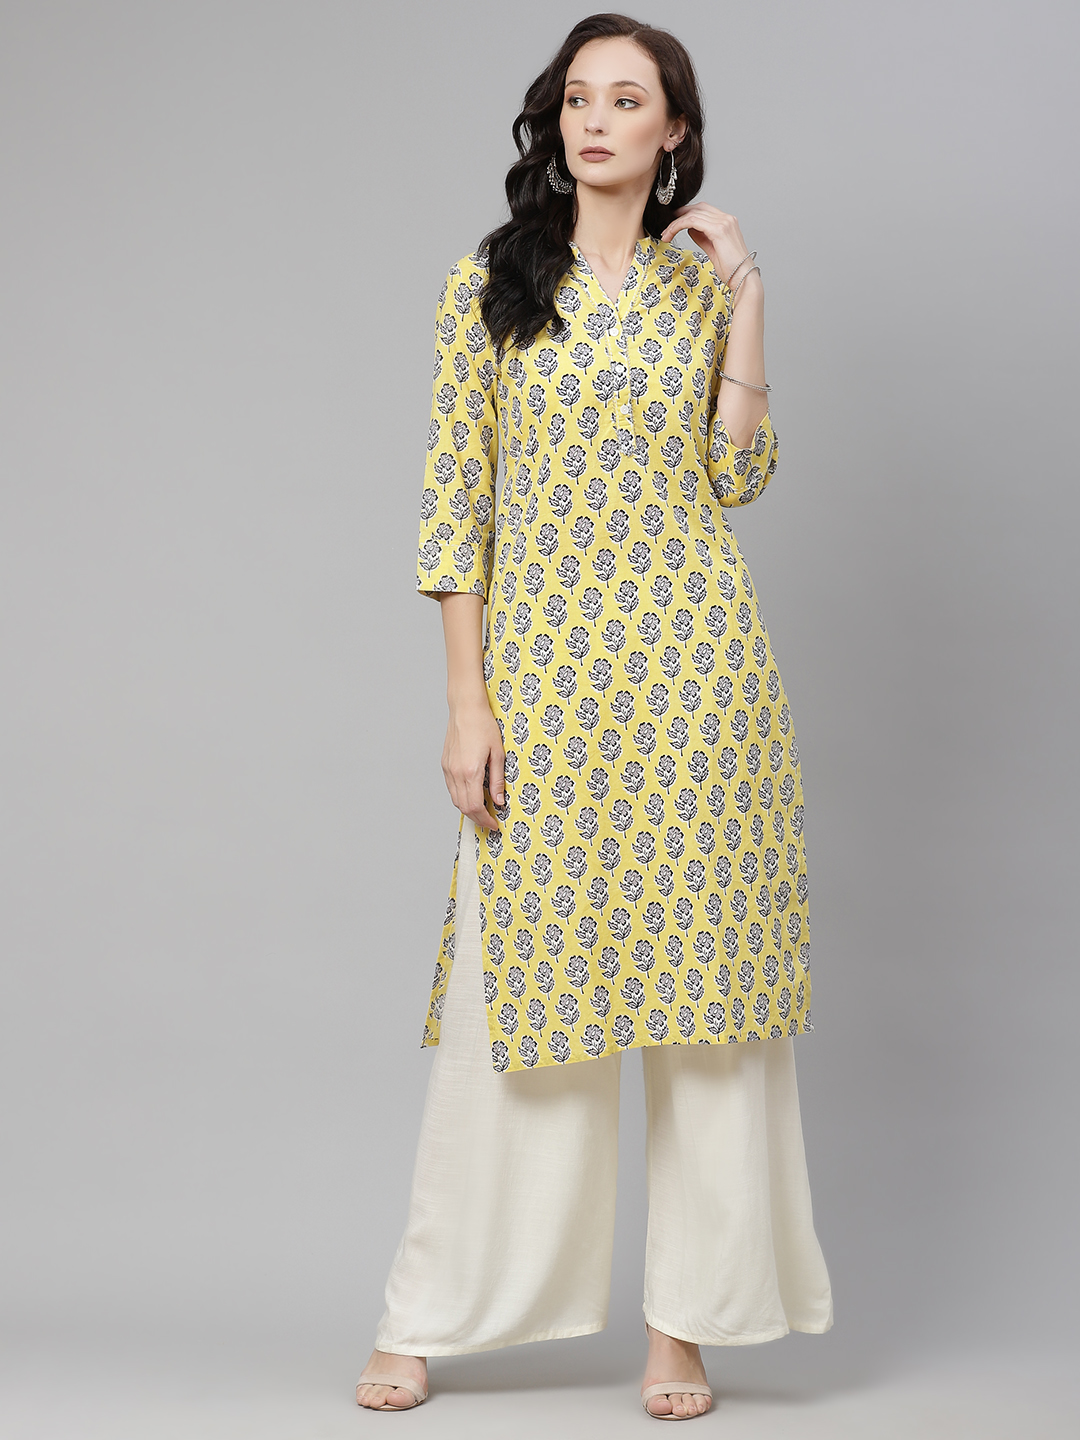 Ladies Designer Dress In Chandrawal